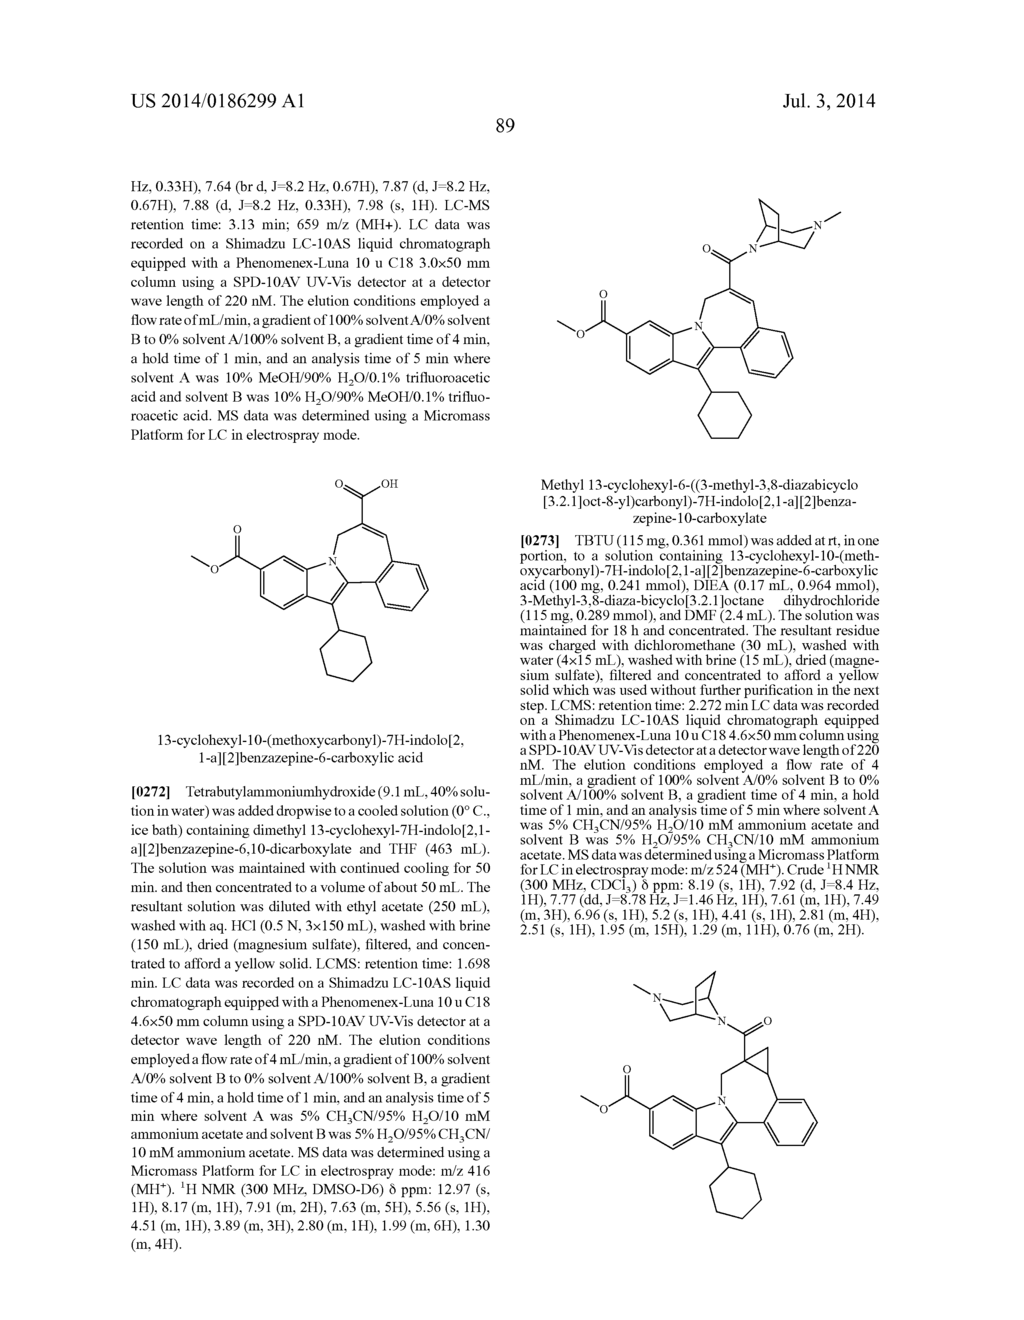 Cyclopropyl Fused Indolobenzazepine HCV NS5B Inhibitors - diagram, schematic, and image 90